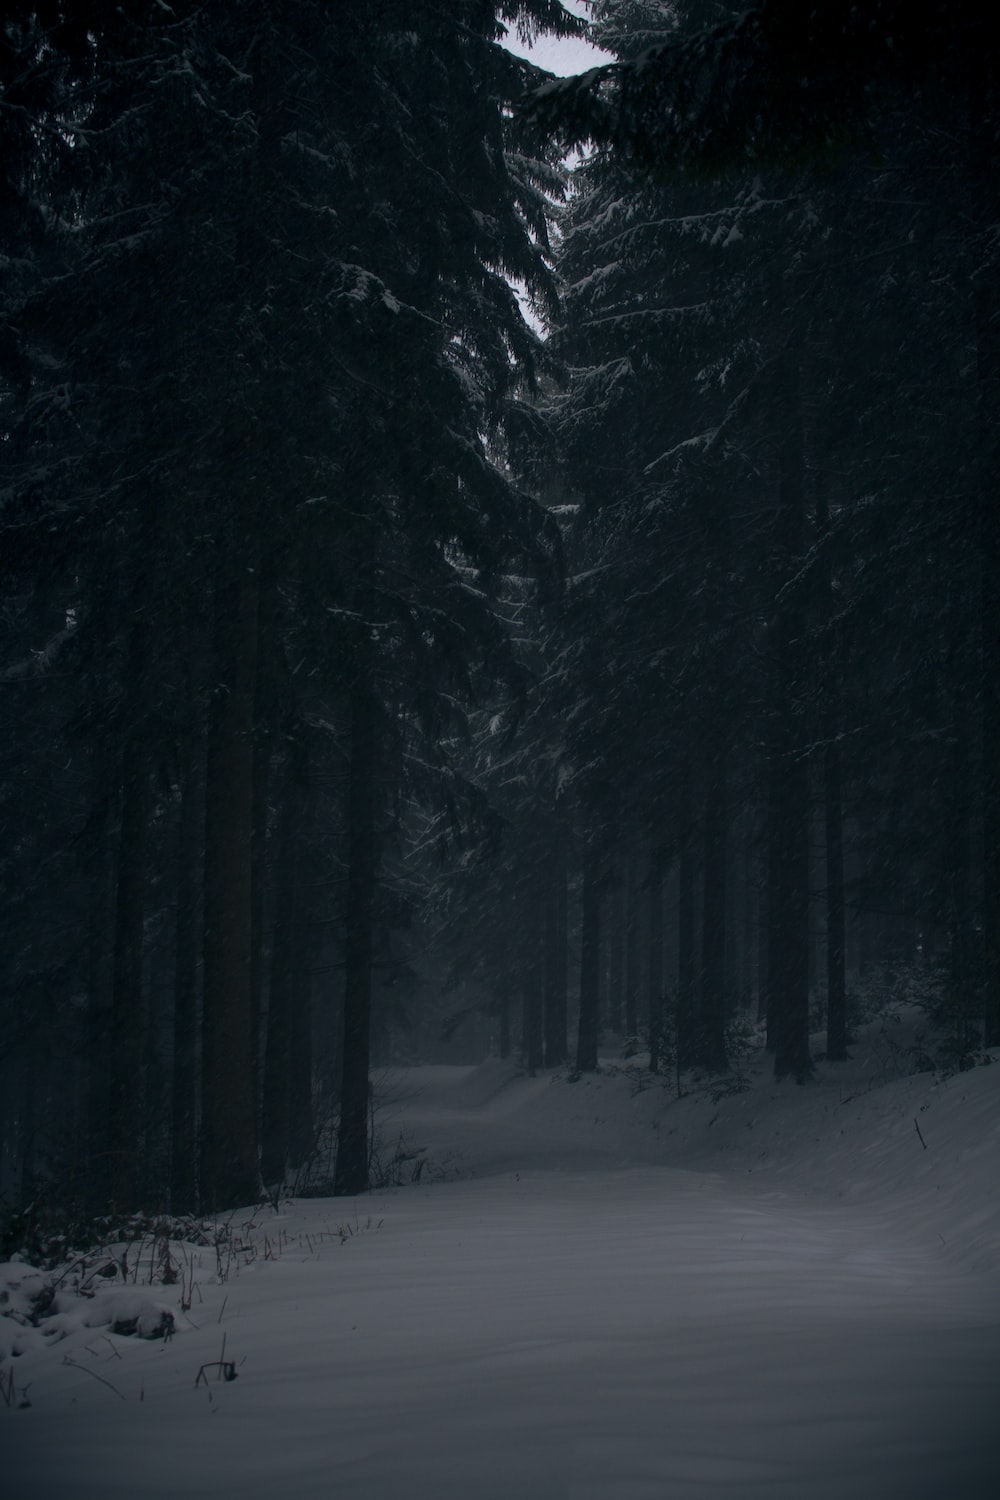 Dark Winter Picture. Download Free Image